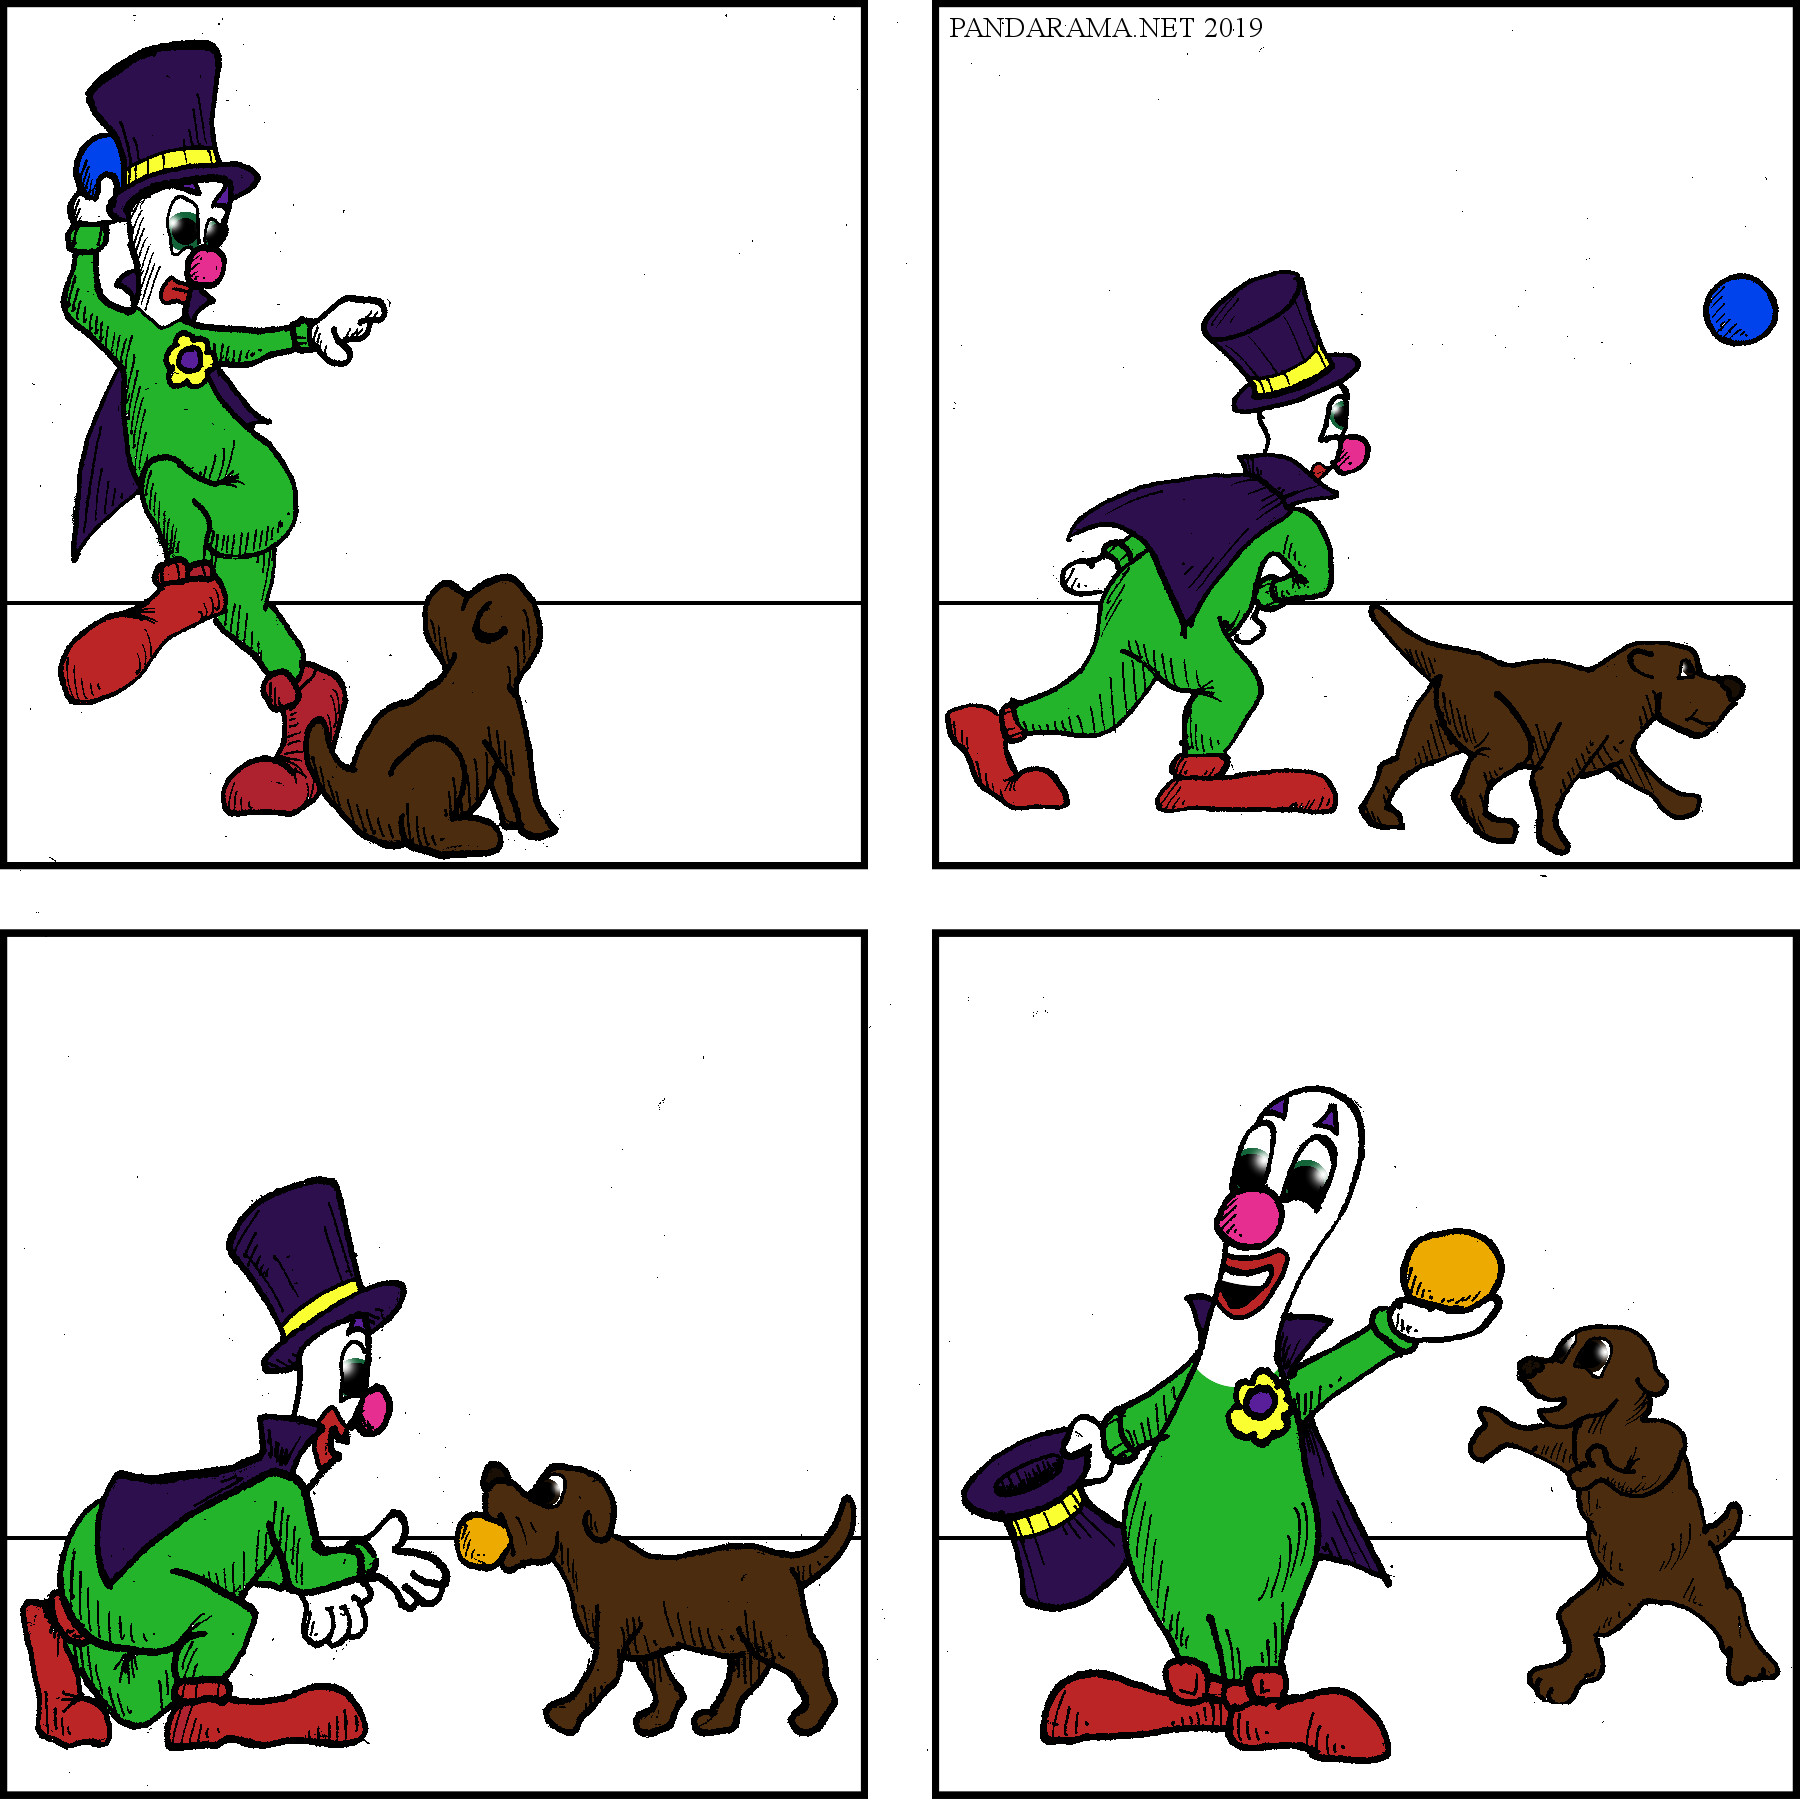 webcomic, magician, clown, plays fetch, dog, retrieve, switch ball, magic trick